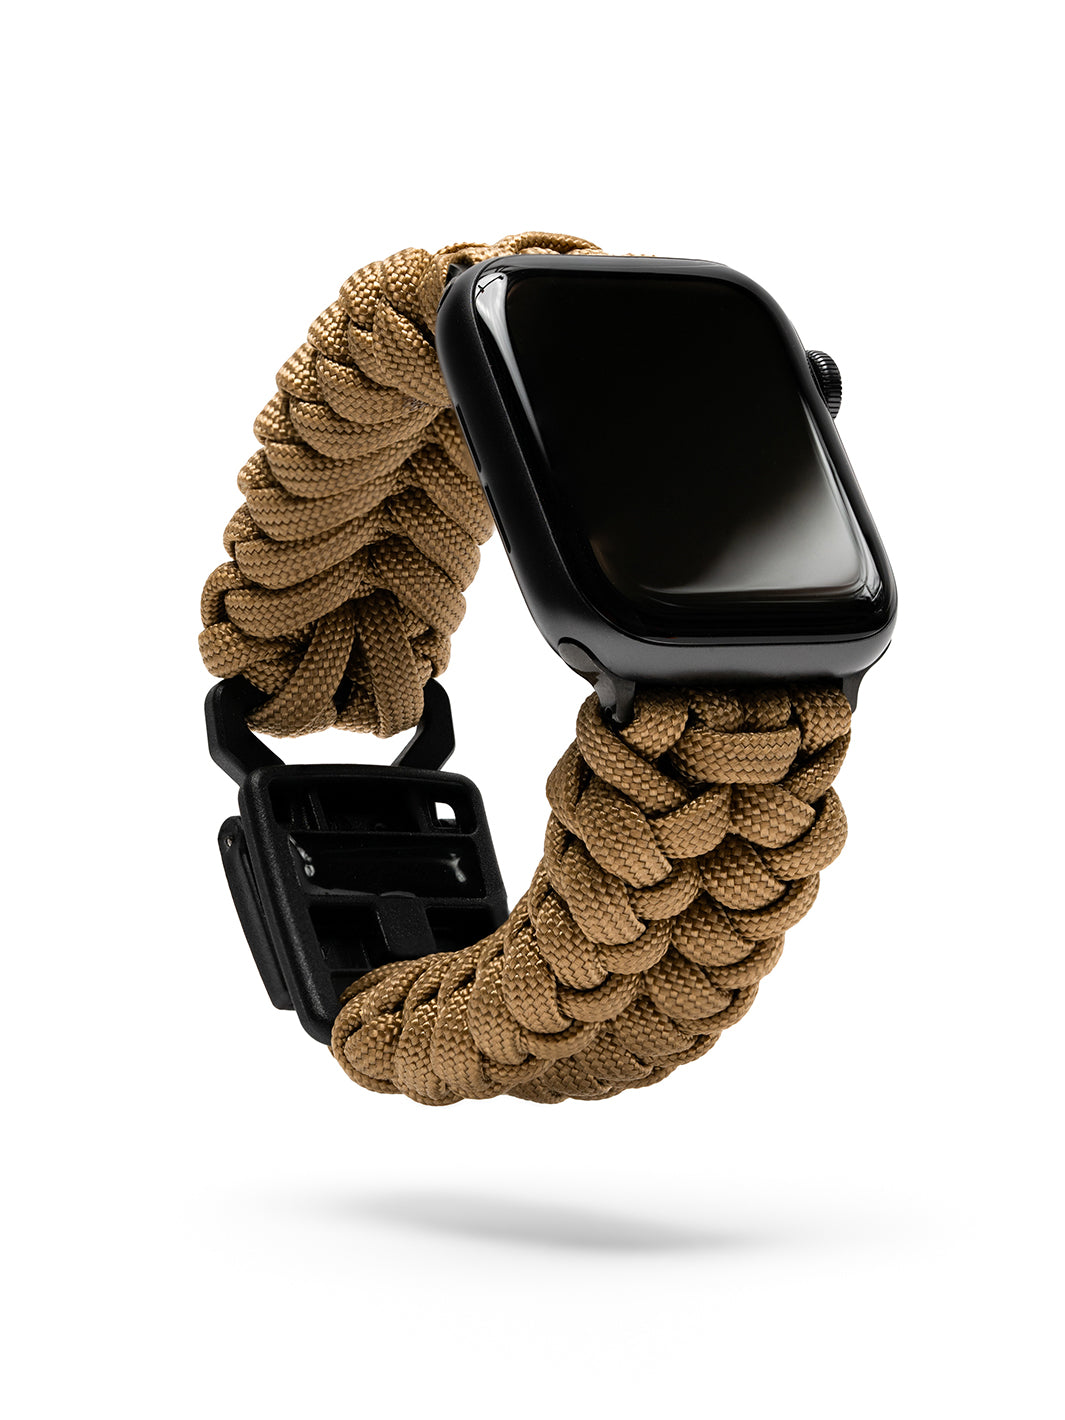 Strapcord Ribs Apple Watch Band Strap Article 002 Desert Tan 1 1065 x1420